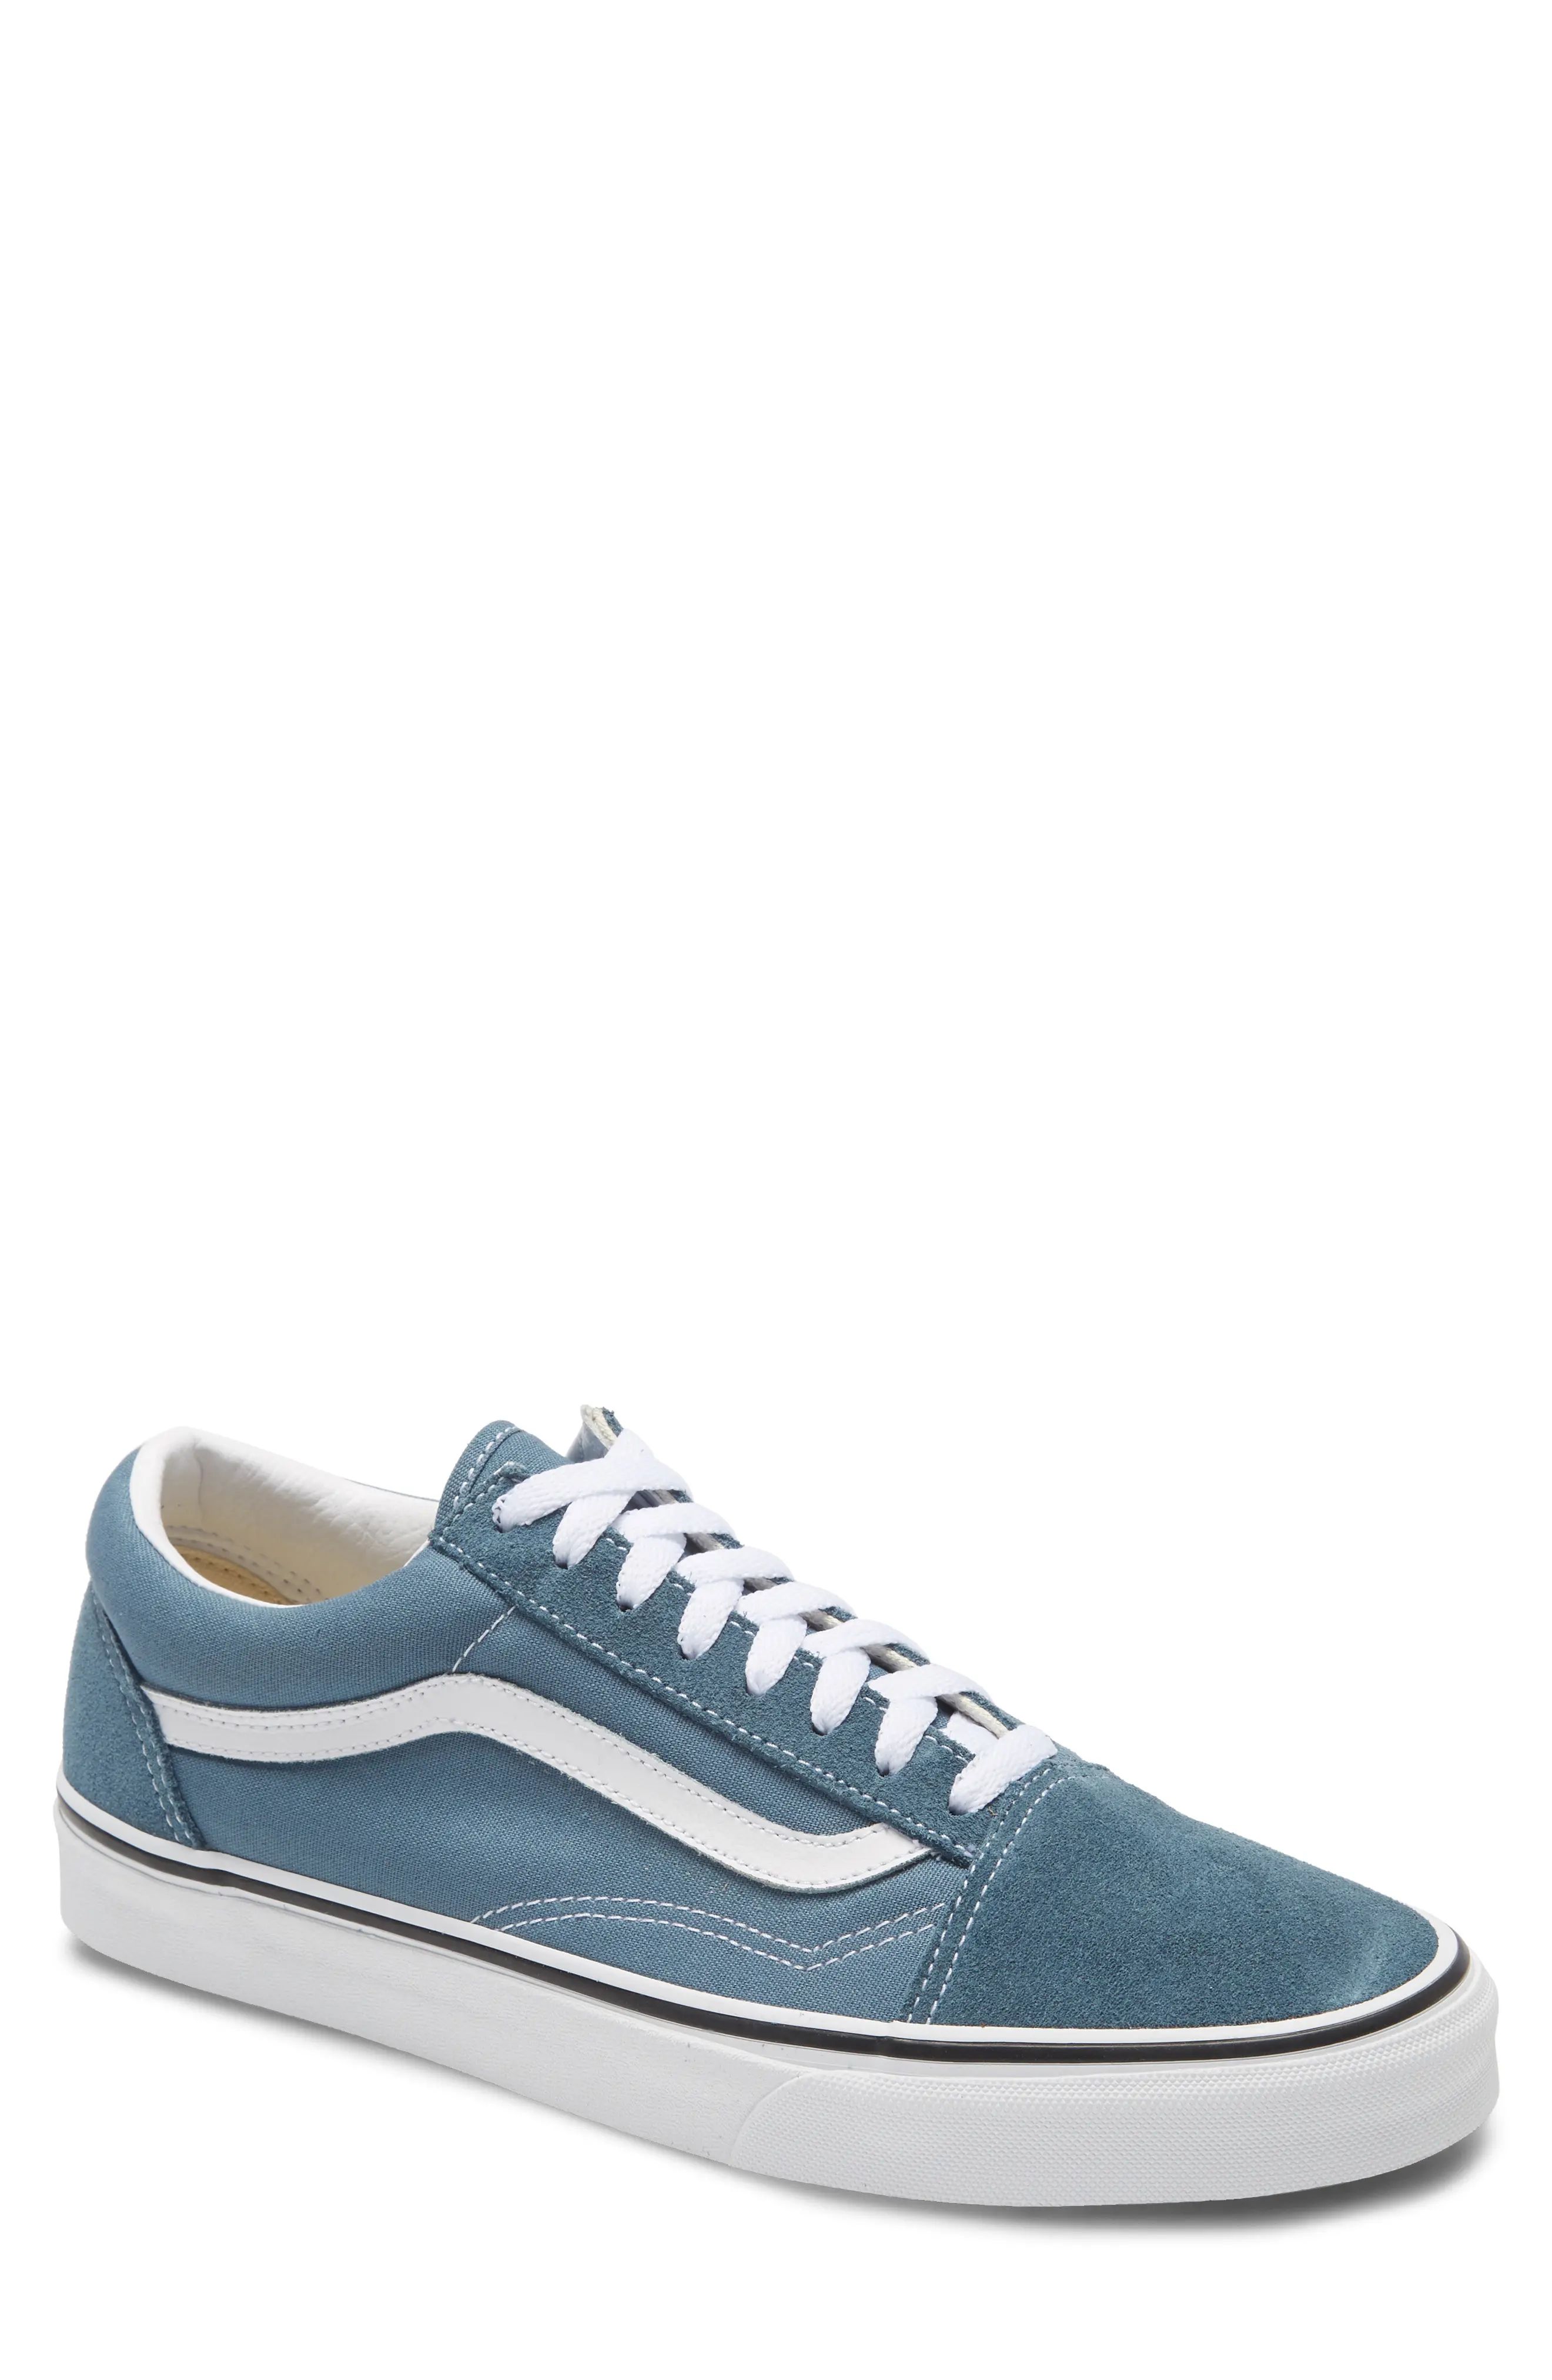 Men's Vans Old Skool Sneaker, Size 8 M - Blue | Nordstrom